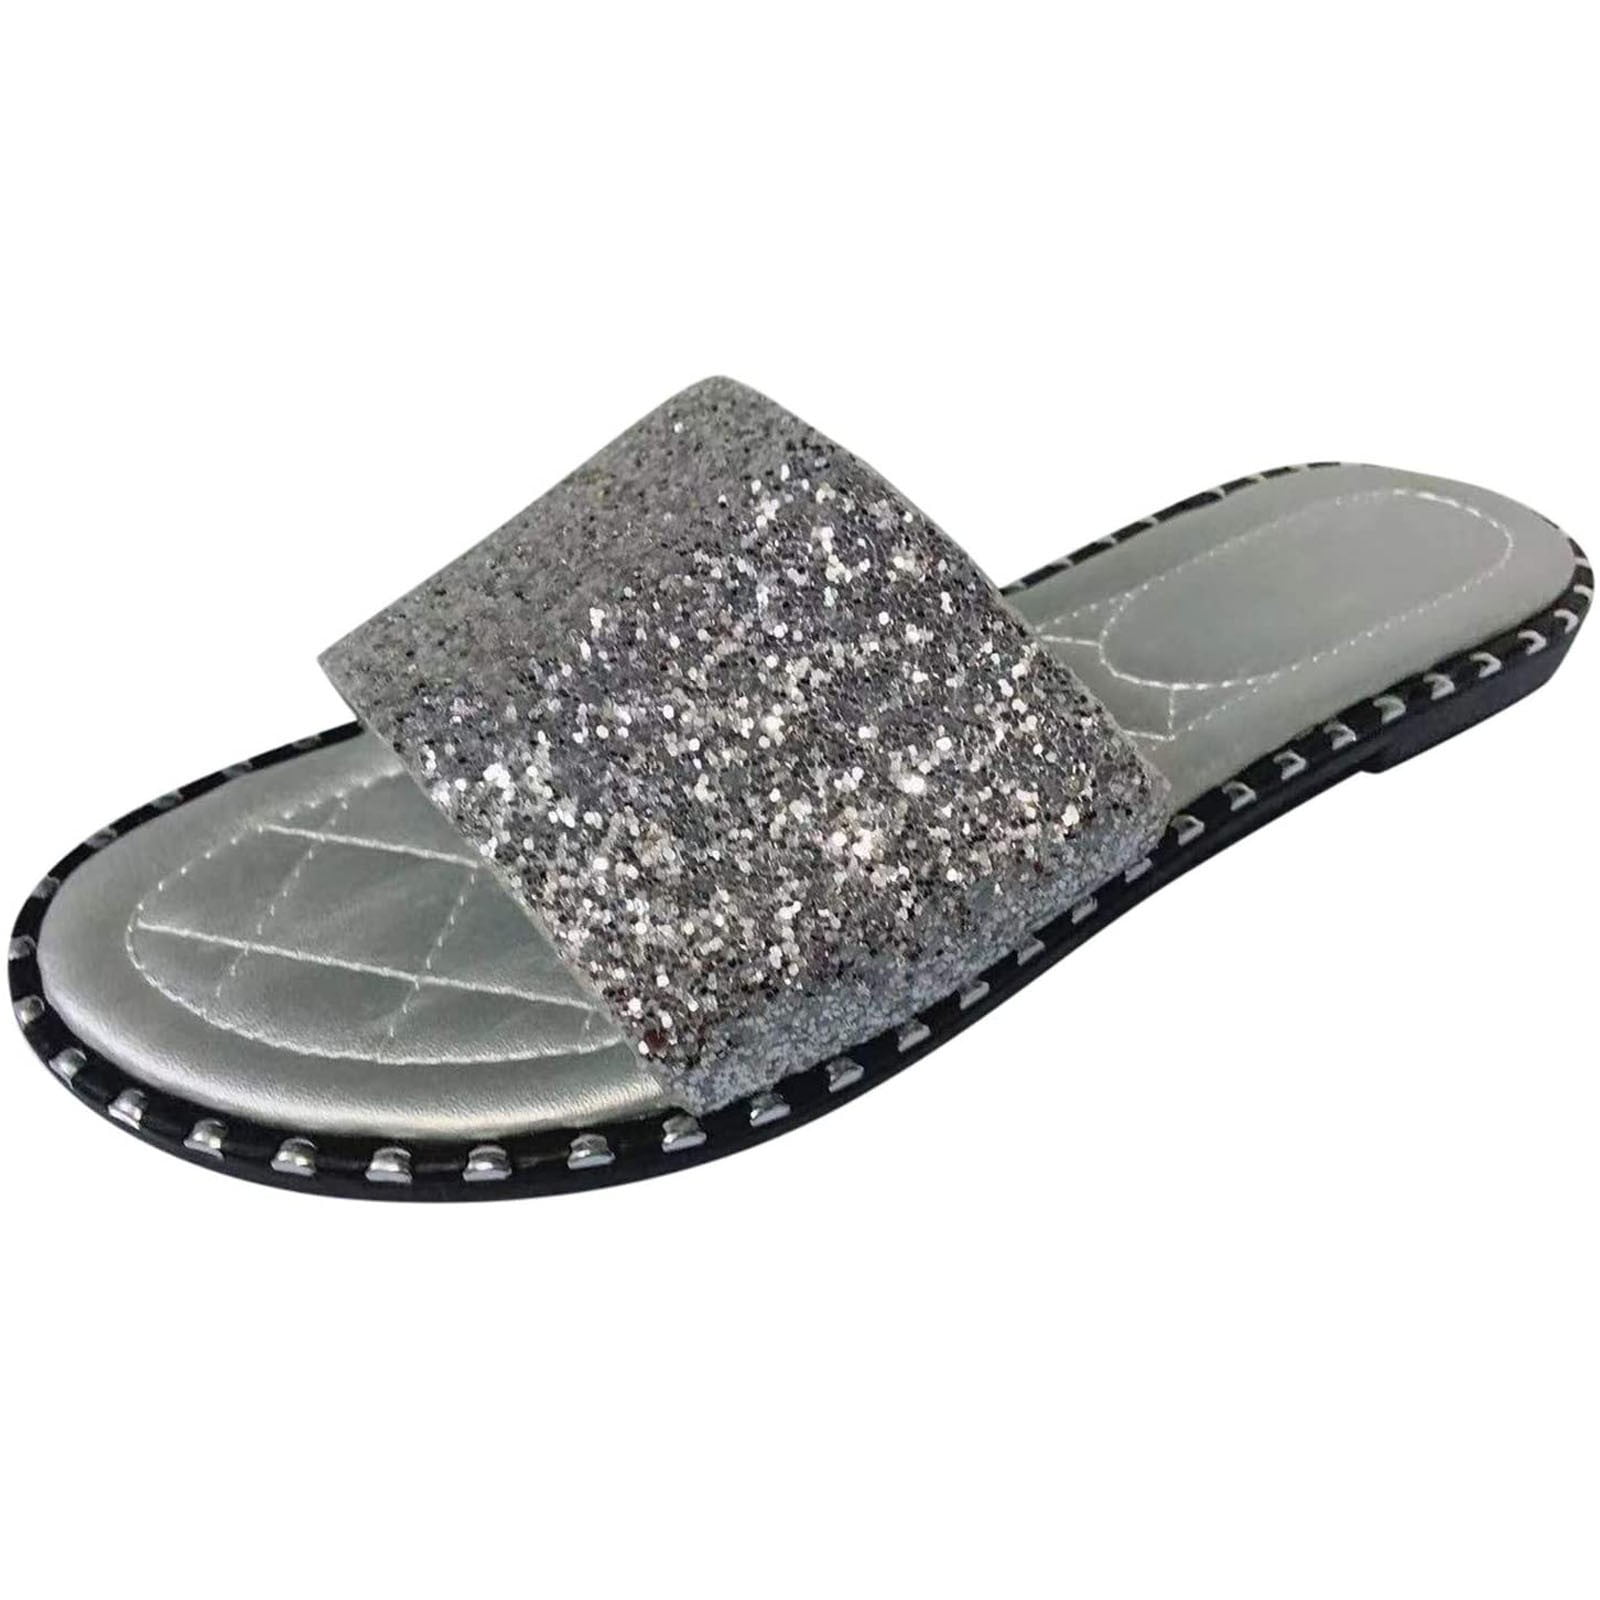 Women's Ladies Sandals Toe Post Sleepers Low Wedge Glittery Flip Flops Shoes